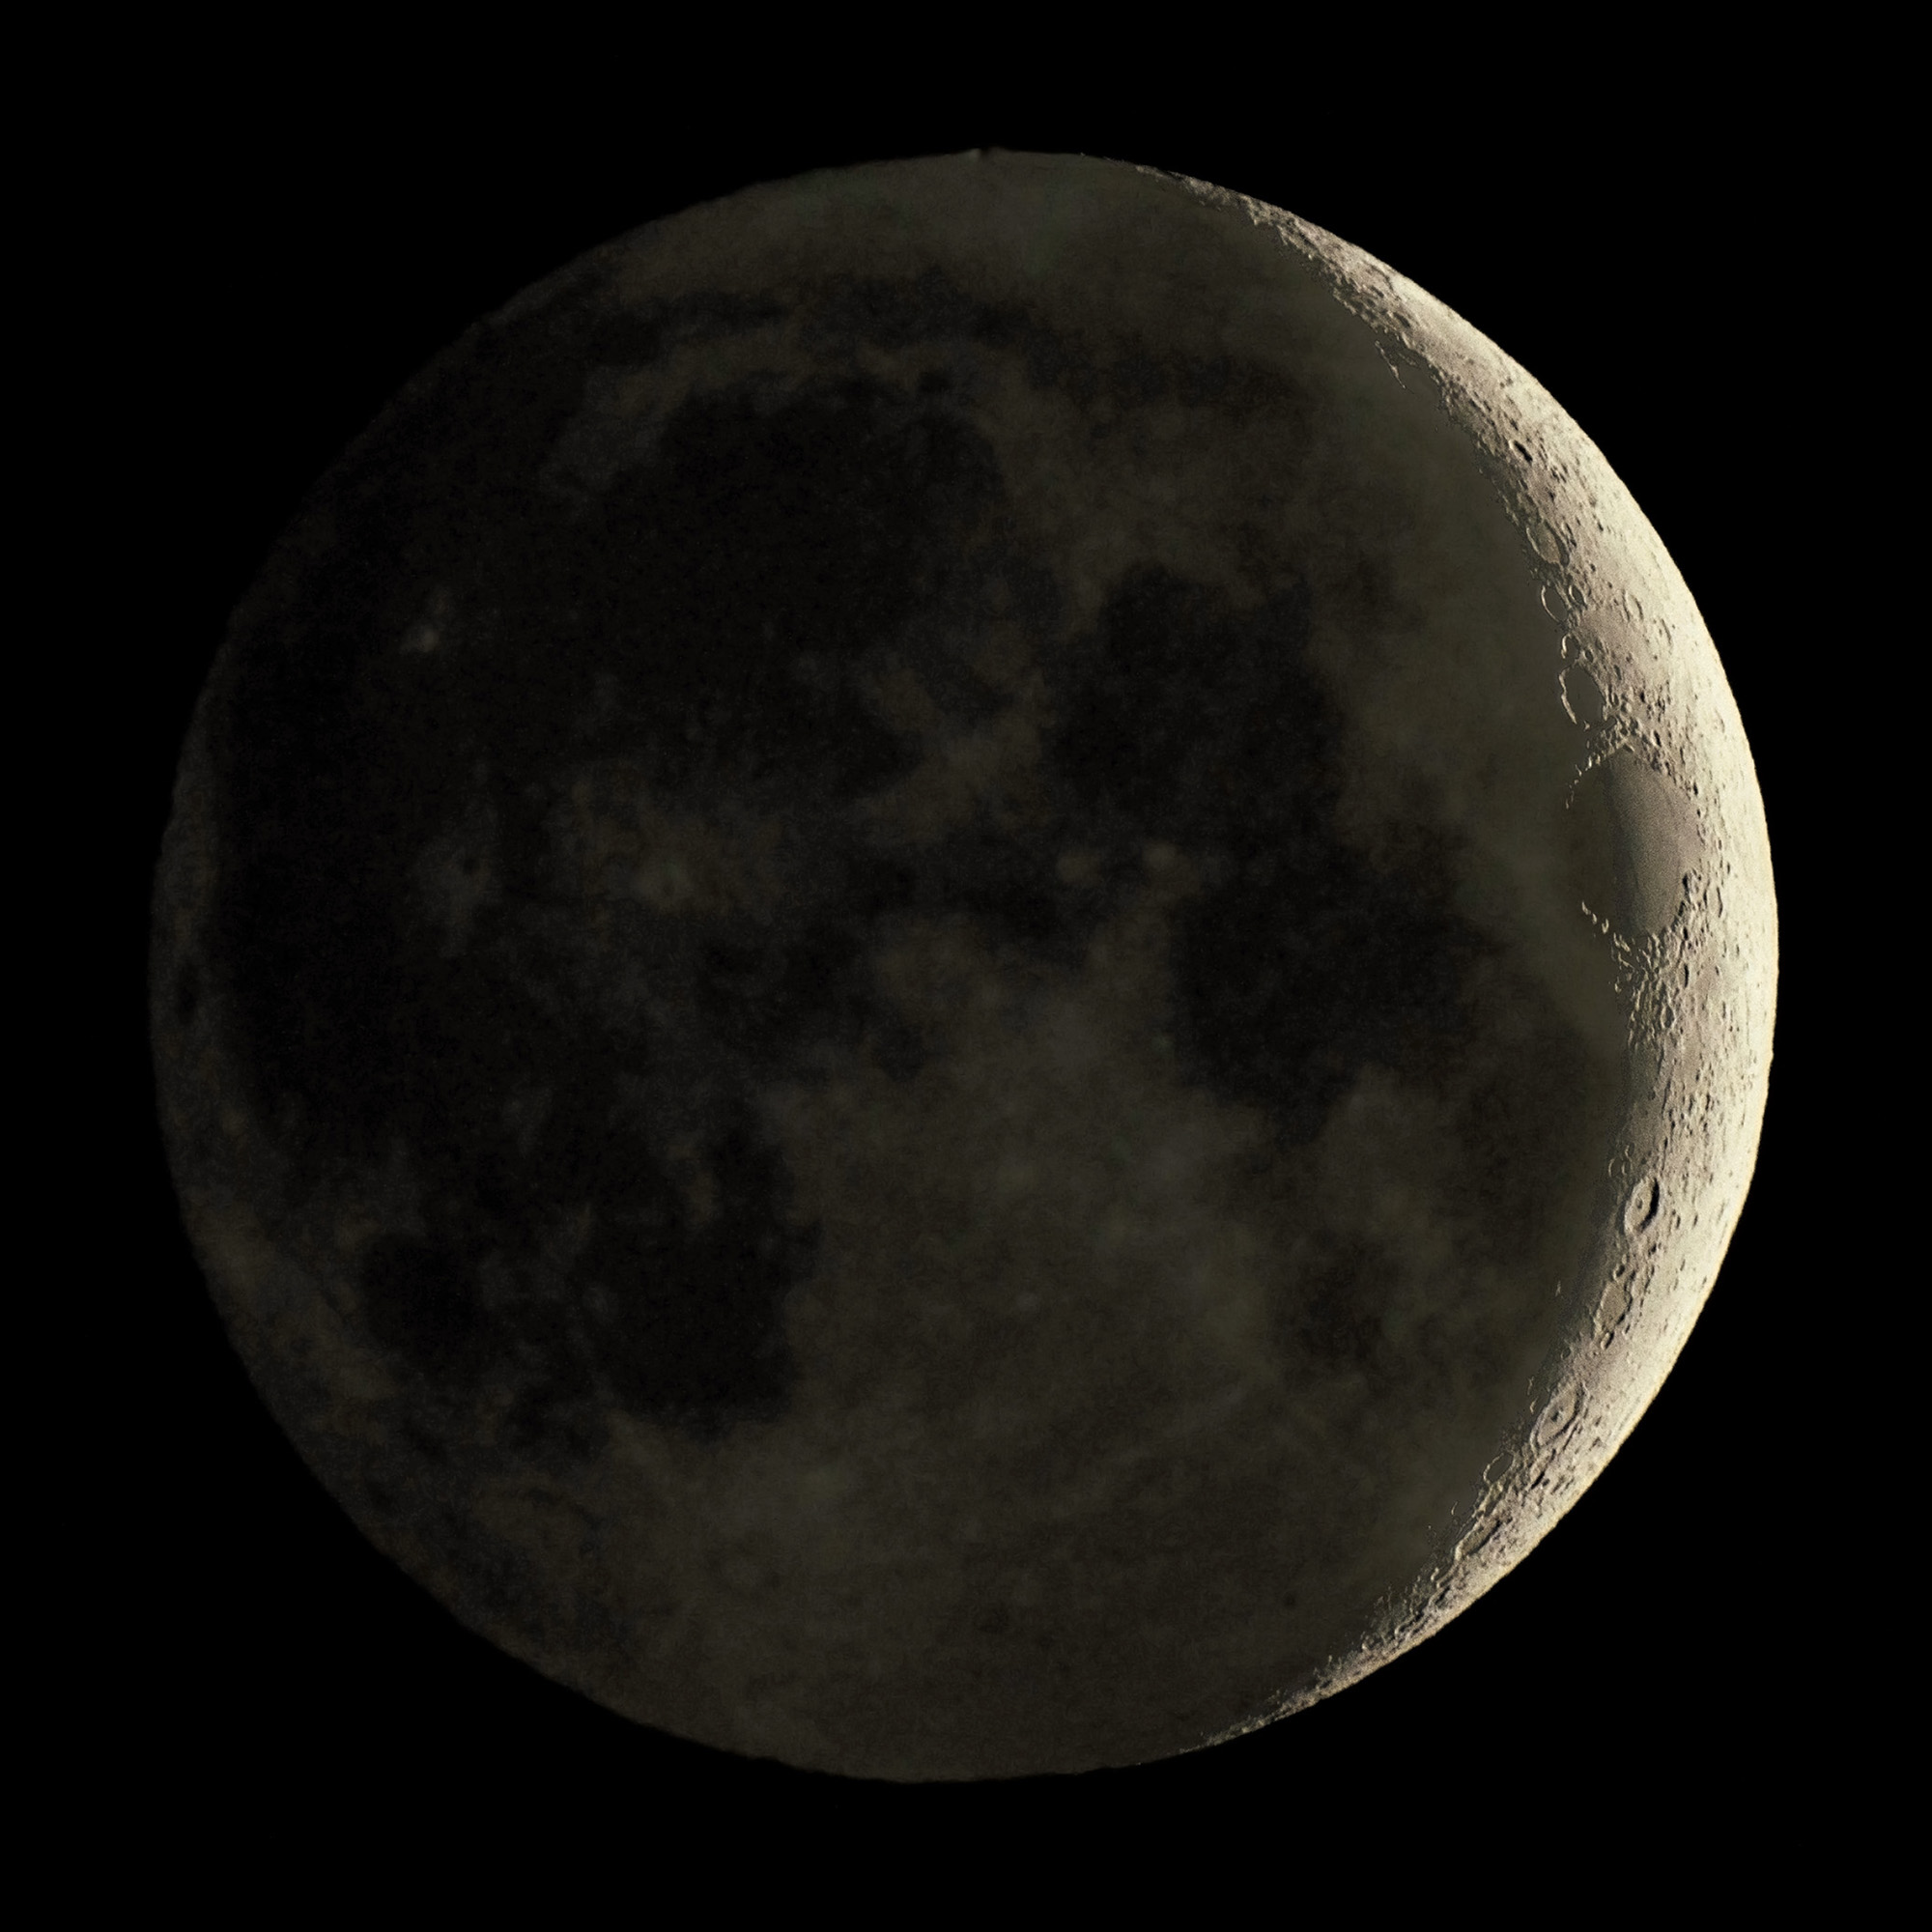 03 Earthshine on the Waxing Crescent Moon